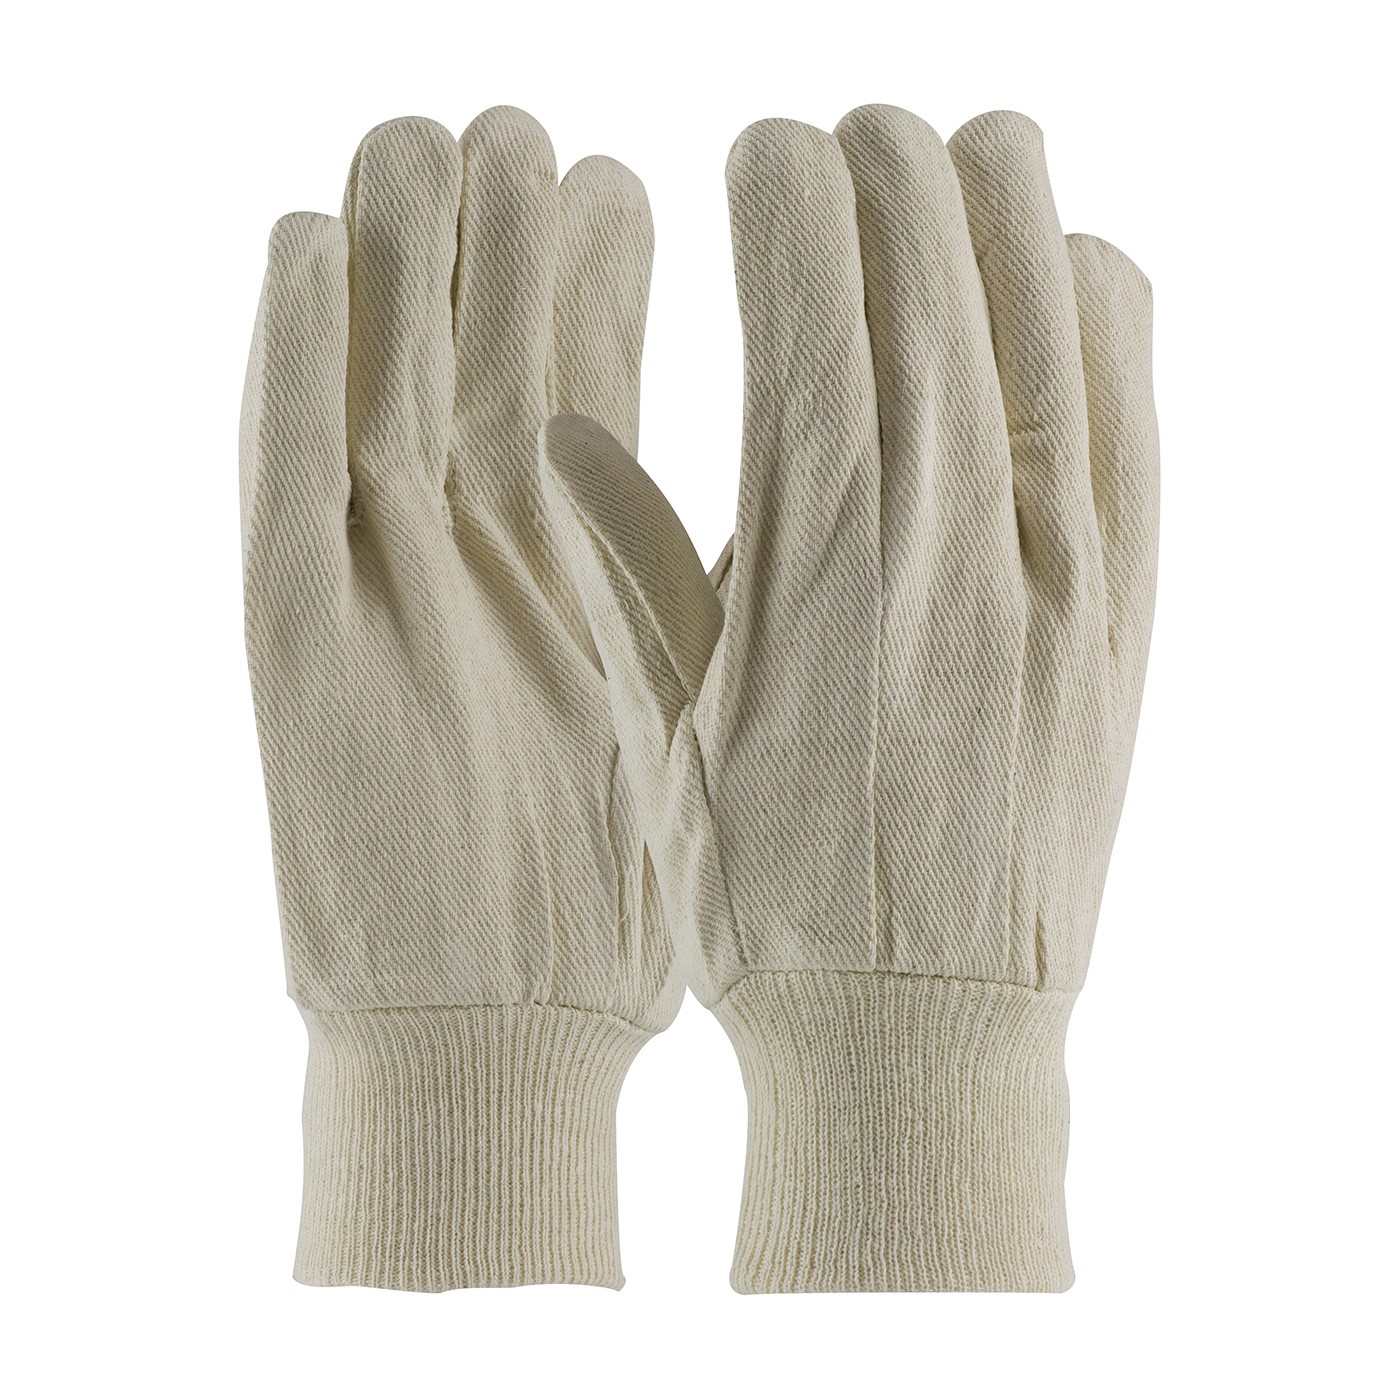 PIP® Economy Grade Cotton Canvas Single Palm Glove - Knitwrist  (#90-908I)